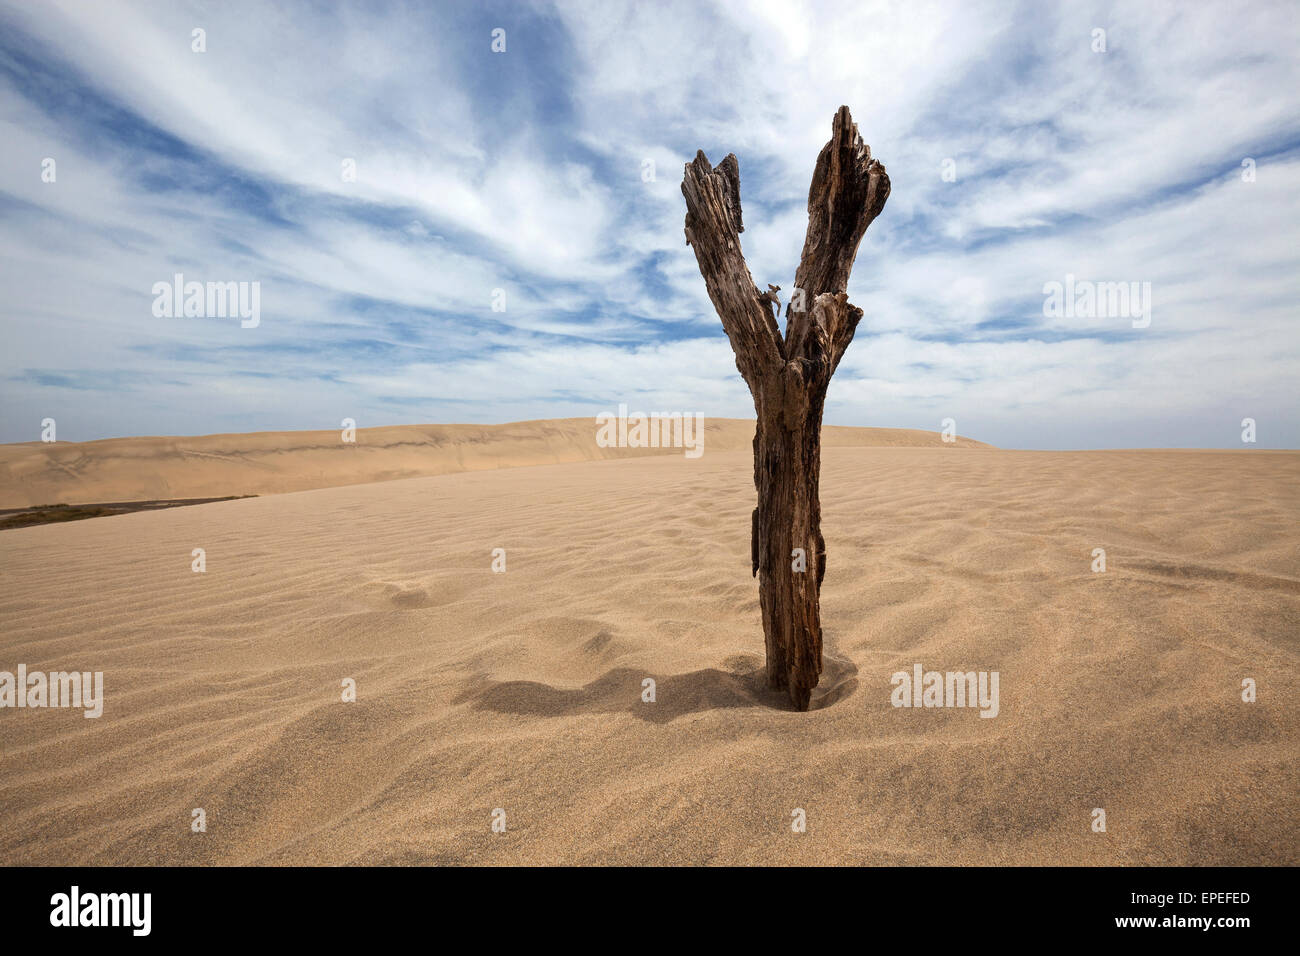 Dead tree, Dunes, Maspalomas Dunes Nature Reserve, cloud formation, Gran Canaria, Canary Islands, Spain Stock Photo